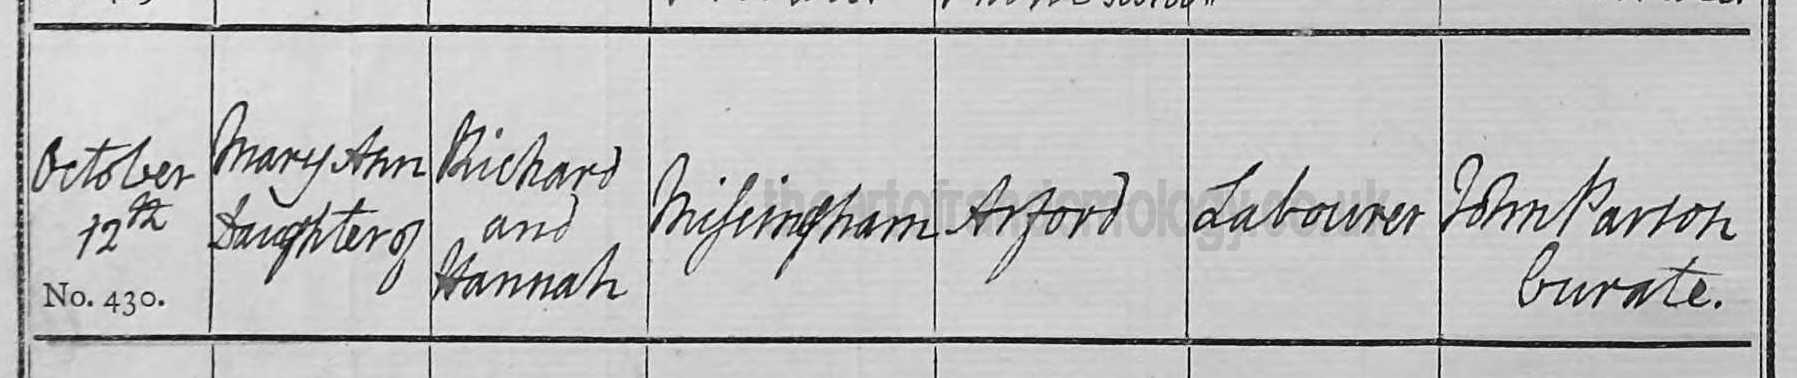 Mary Ann Messingham baptism 1823